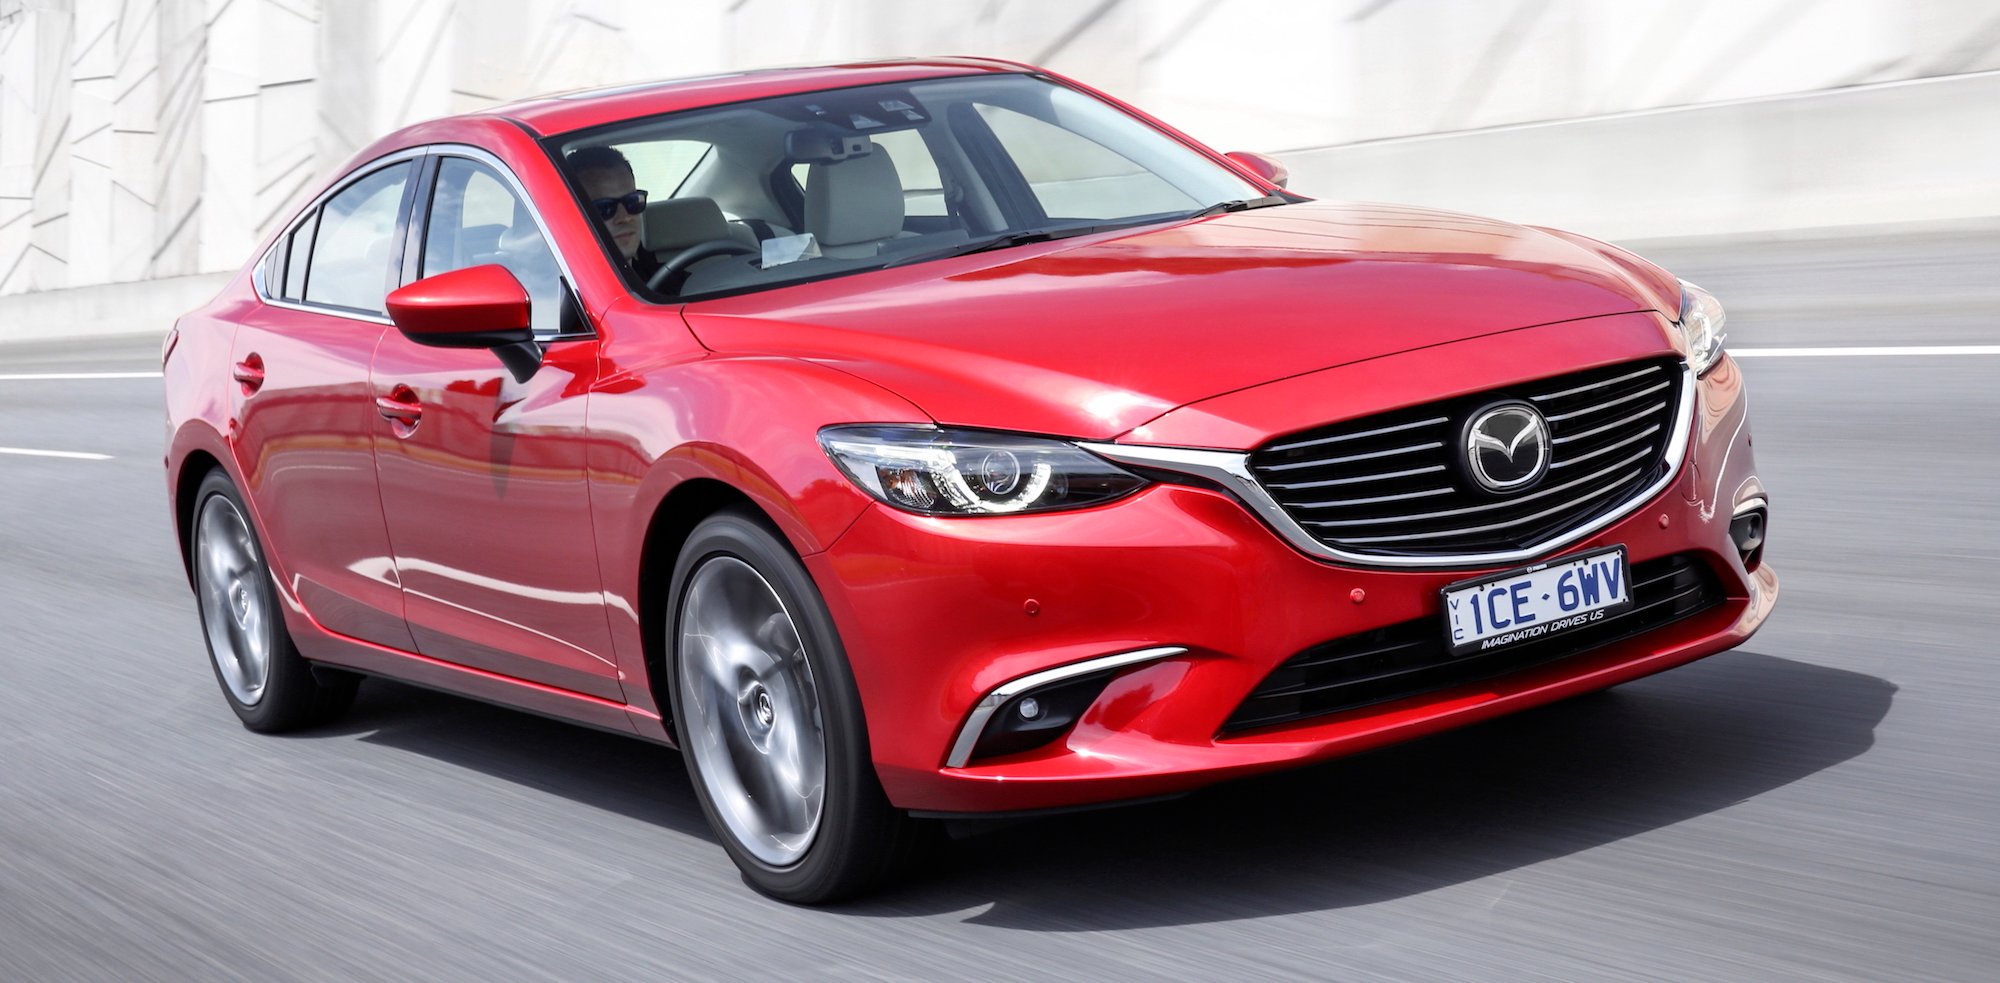 2015 Mazda 6 Review photos CarAdvice